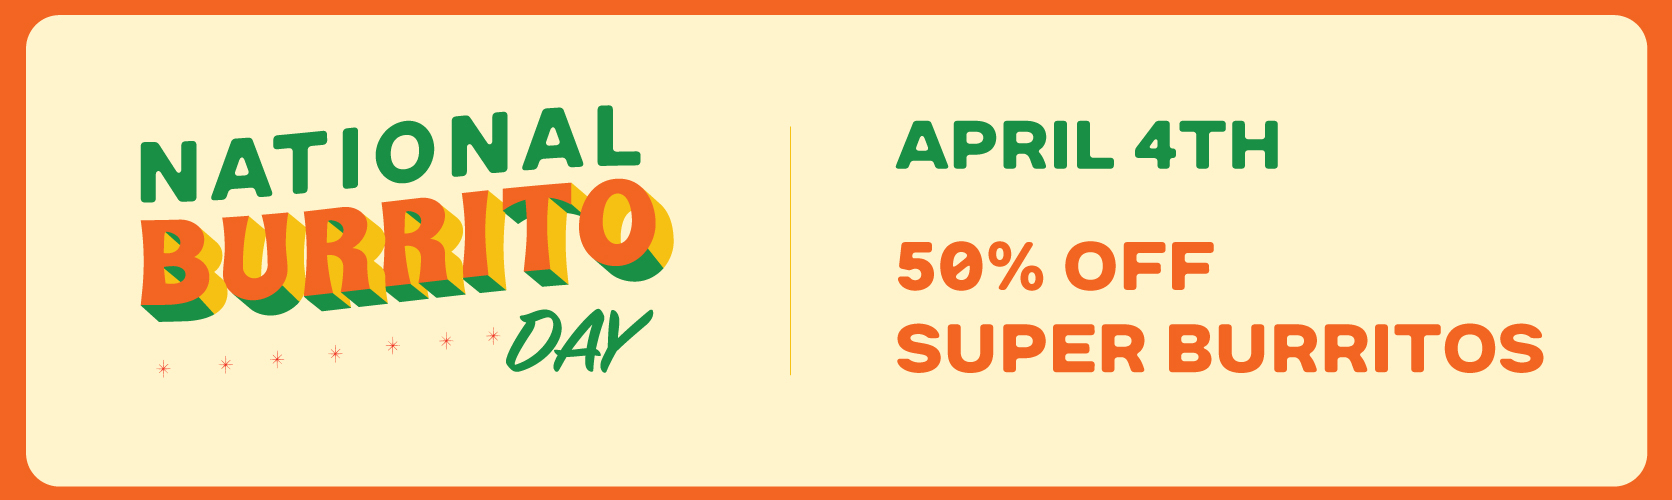 50% Off Felipe’s award-winning Super Burritos for National Burrito Day on April 4th!